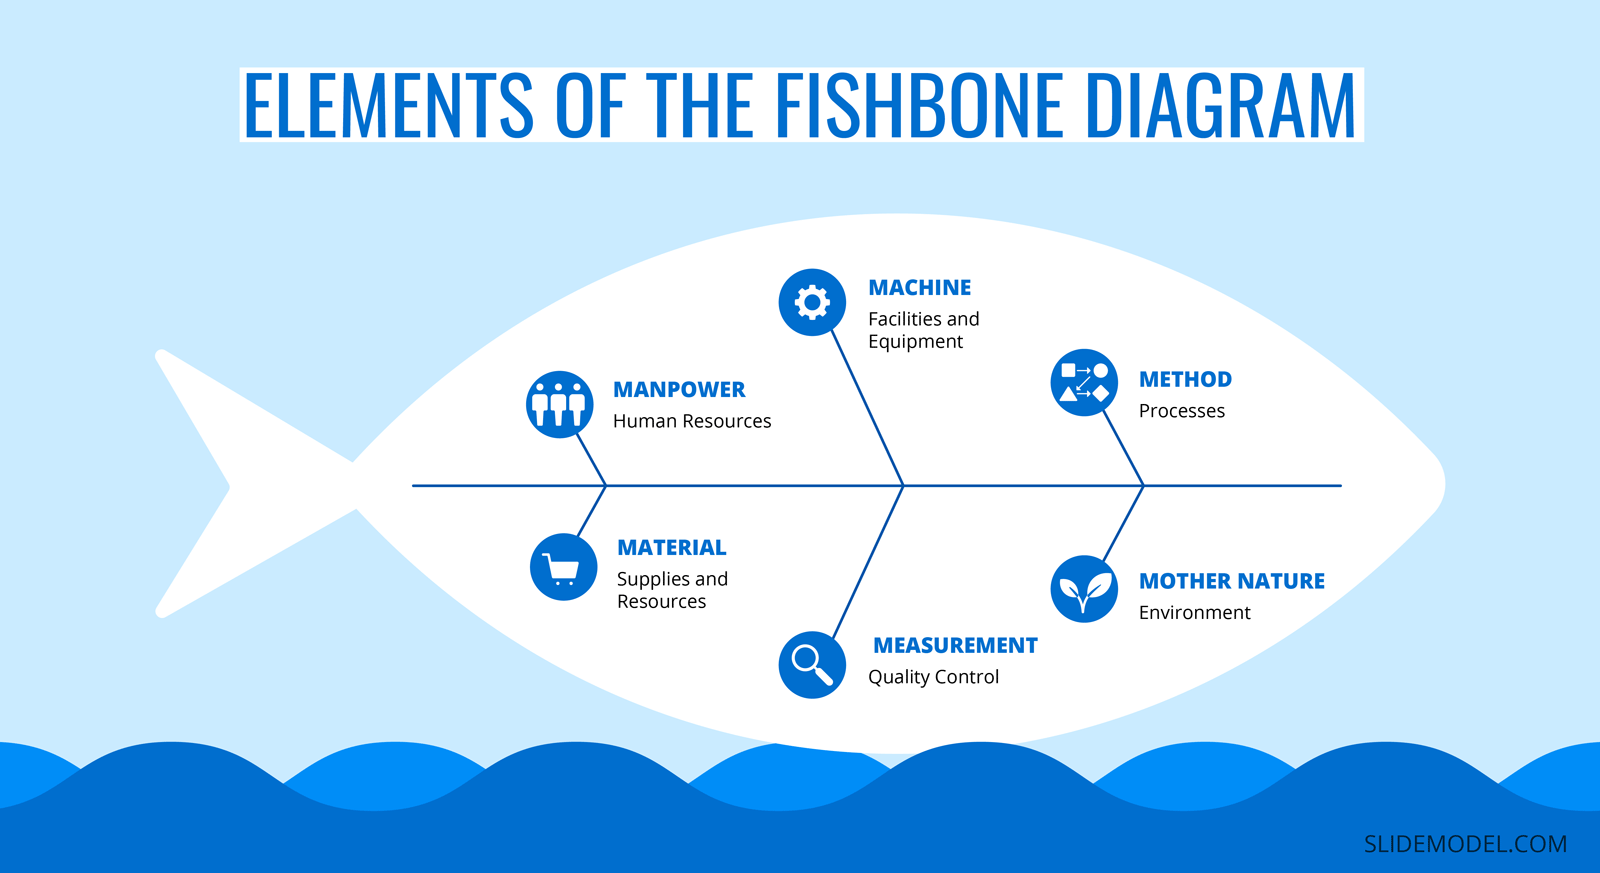 Elements of the Fishbone Diagram